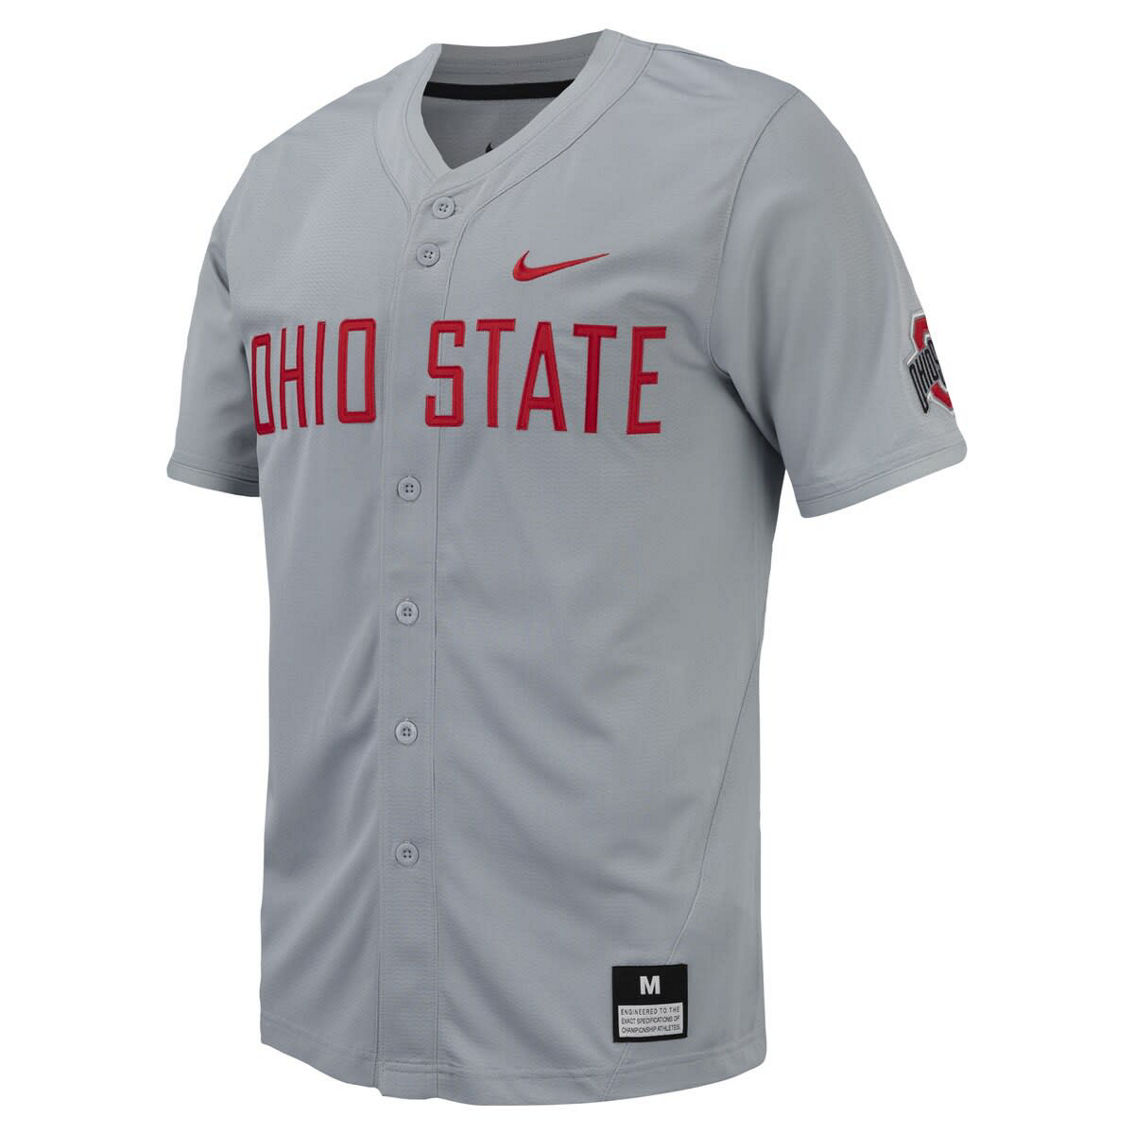 Nike Men's Gray Ohio State Buckeyes Replica Full-Button Baseball Jersey - Image 3 of 4